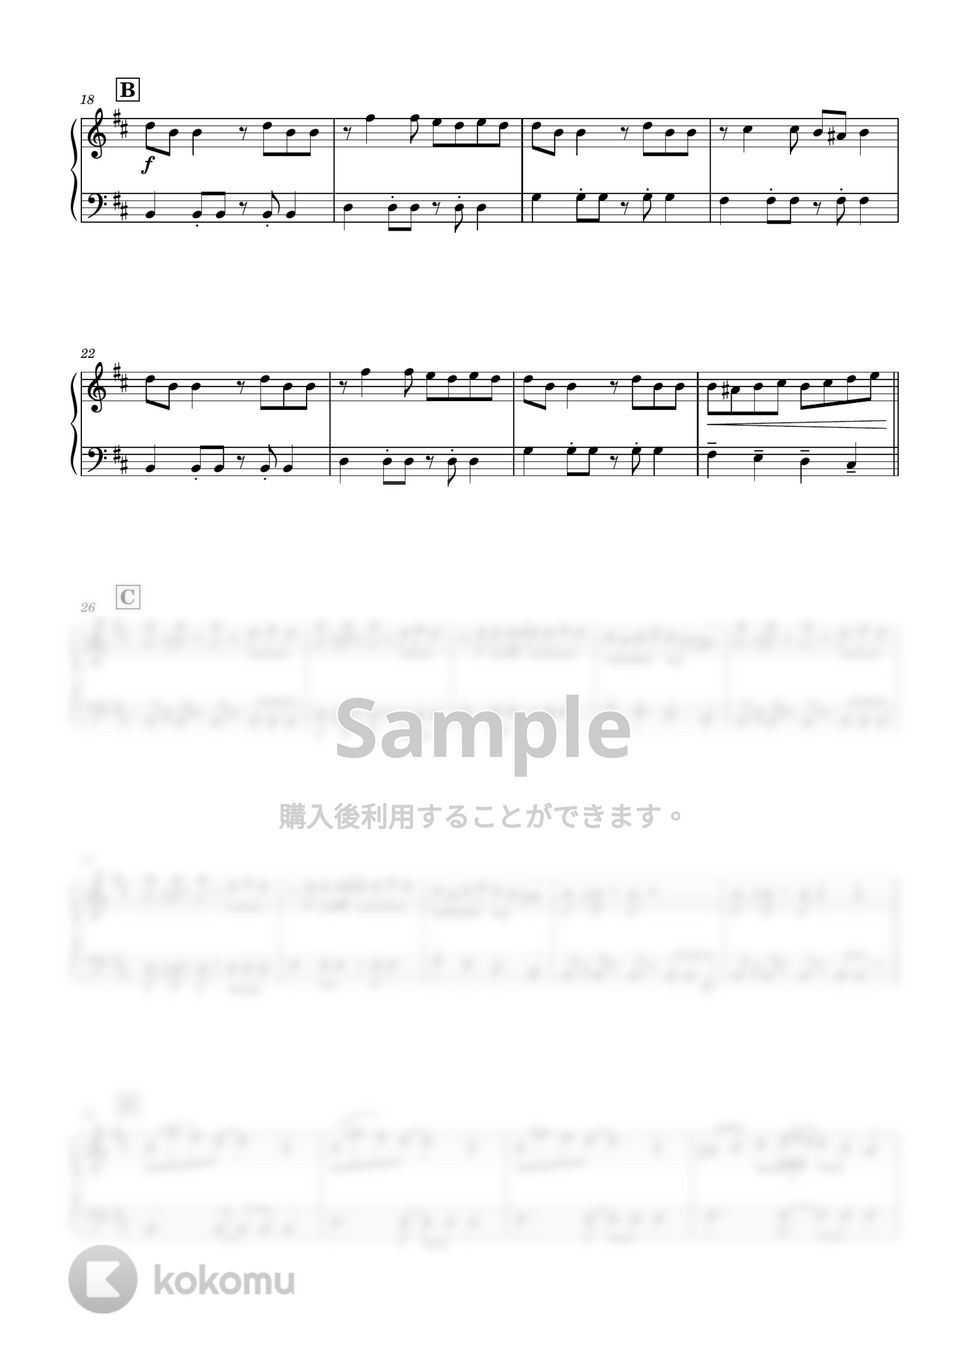 Kanaria - EYE (ピアノソロ初級) by Niisan